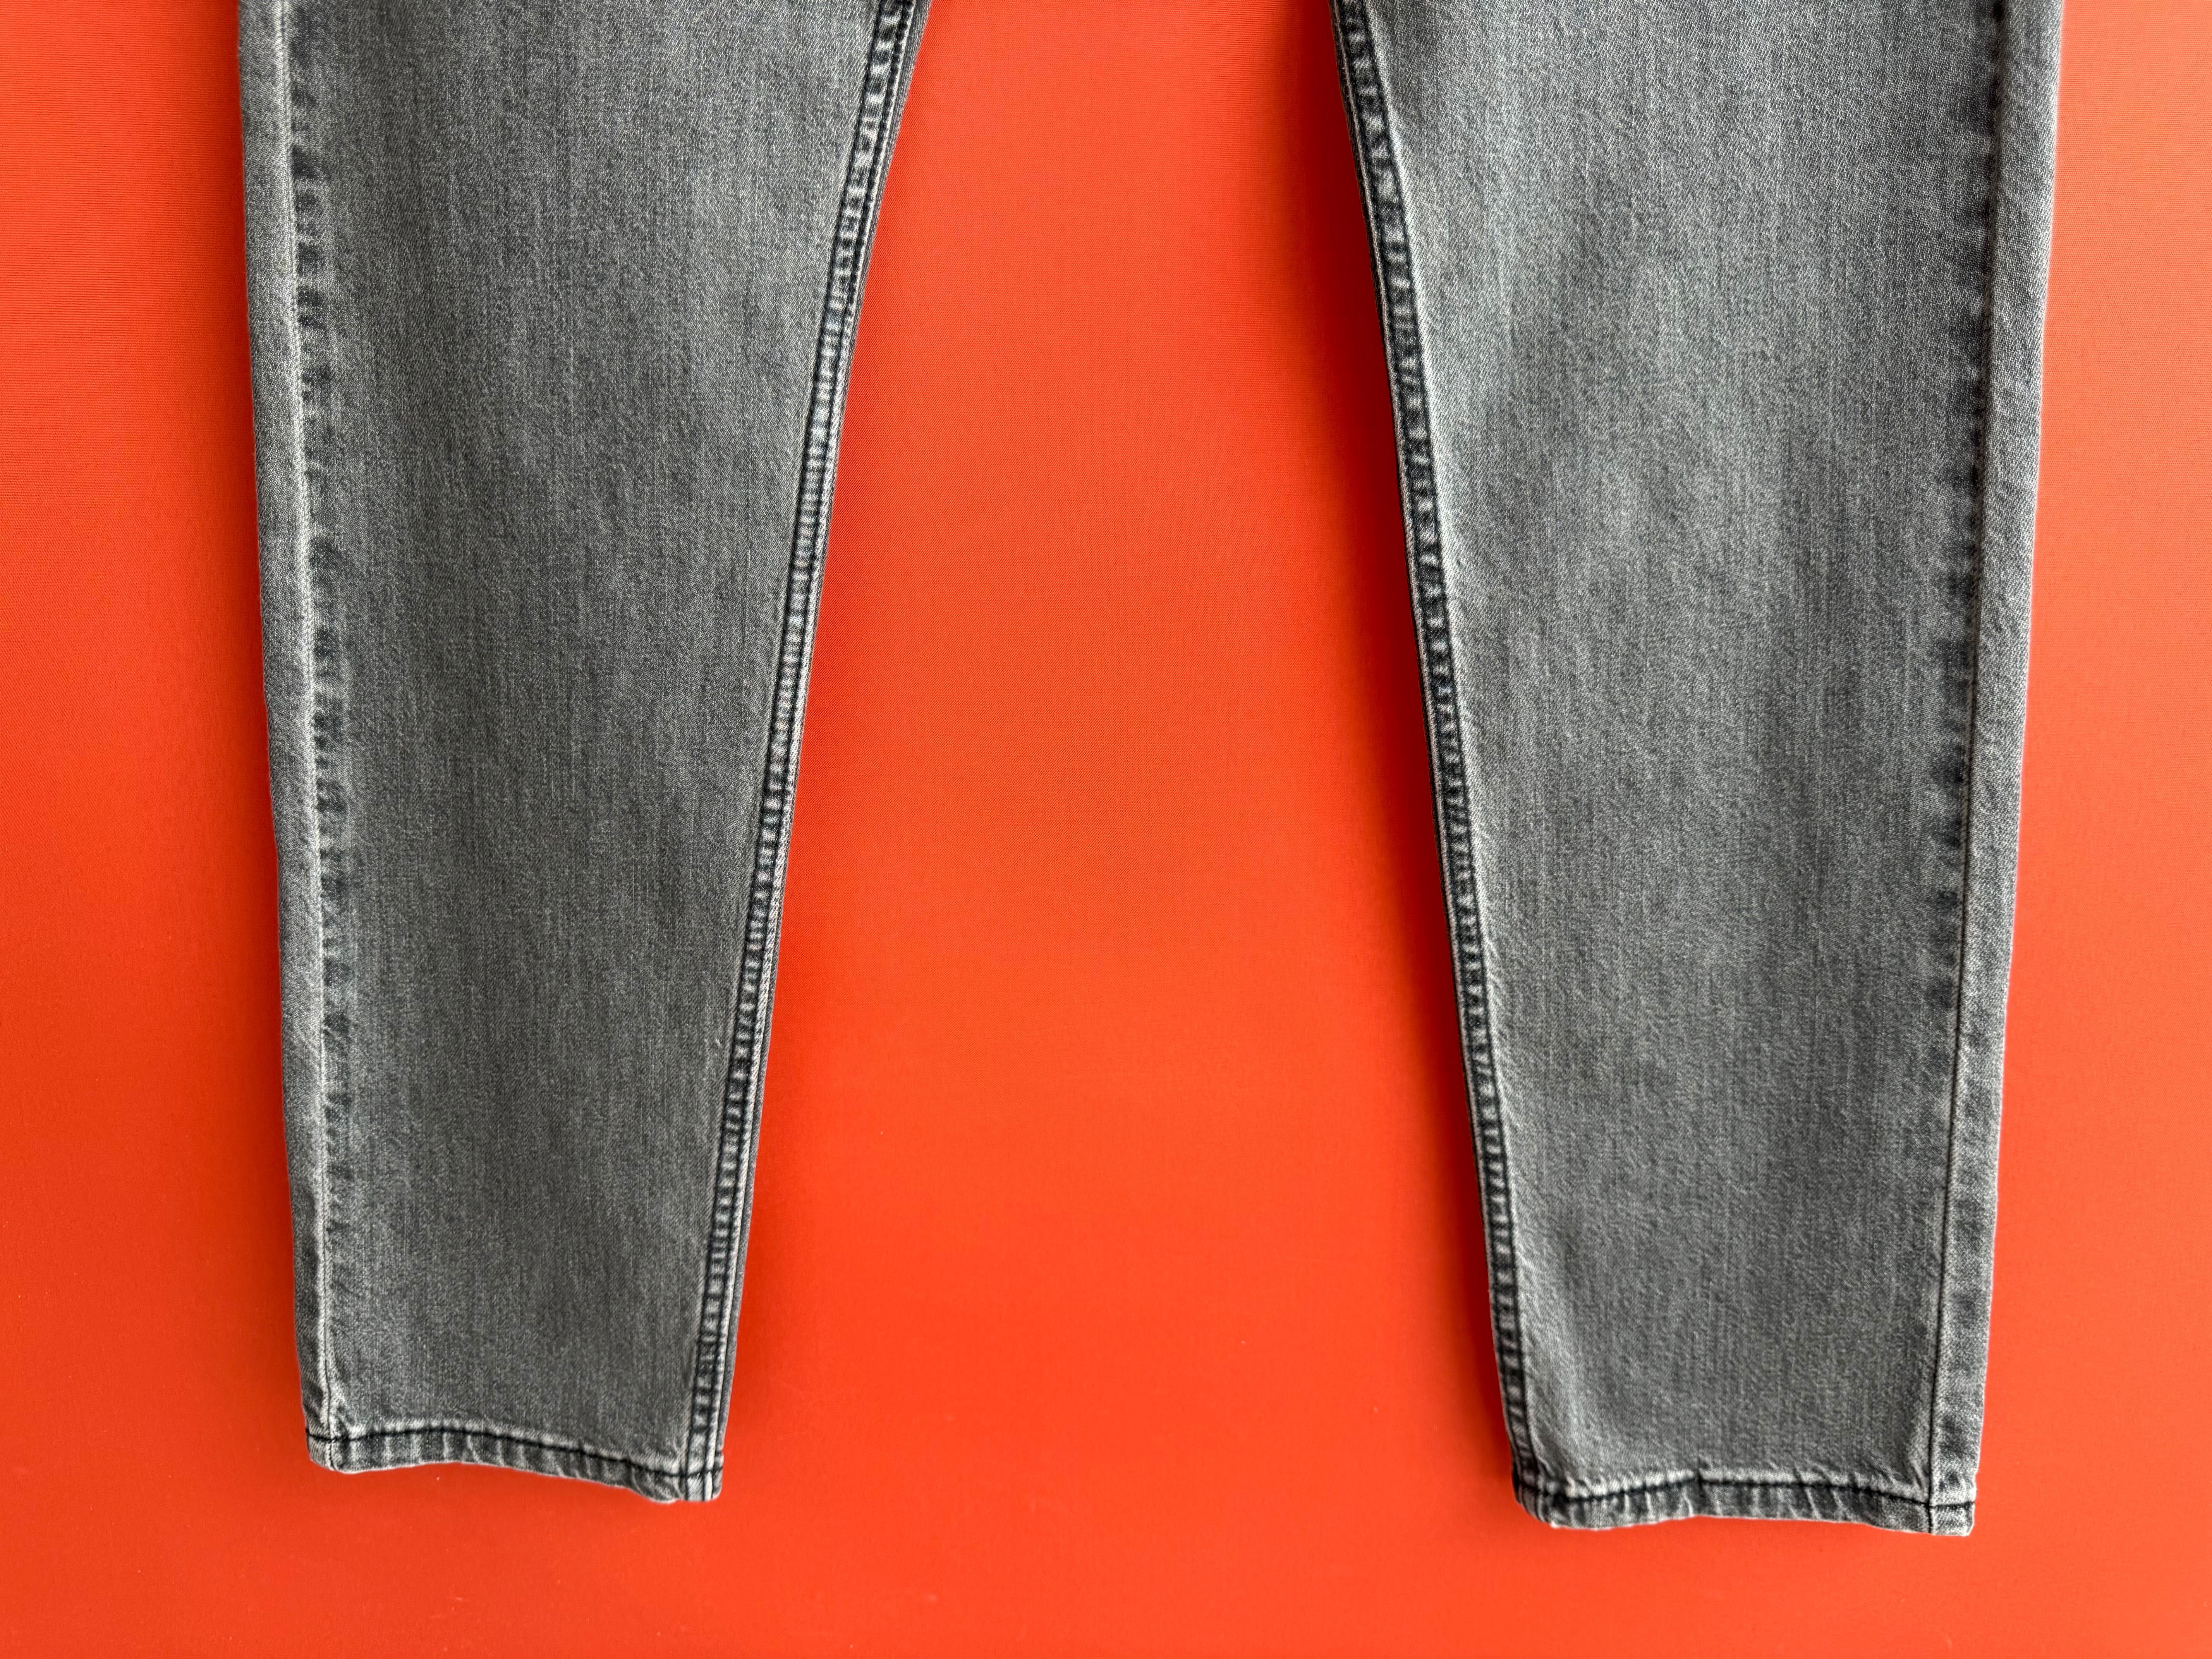 Levis Levi’s 512 Slim Taper мужские джинсы штаны размер 34 NEW